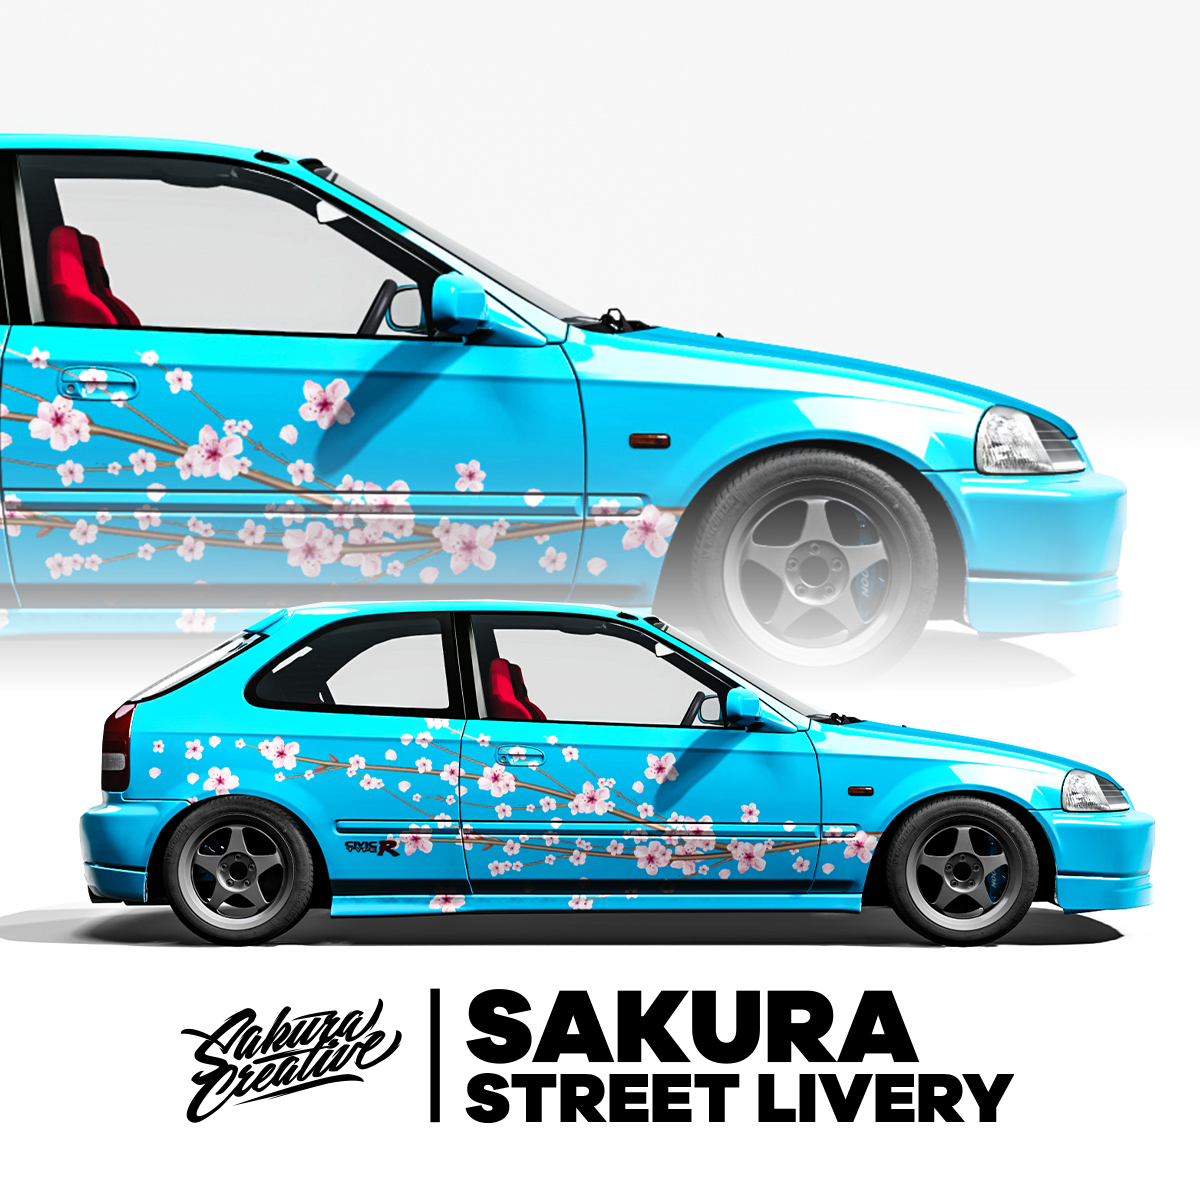 Sakura Street Livery